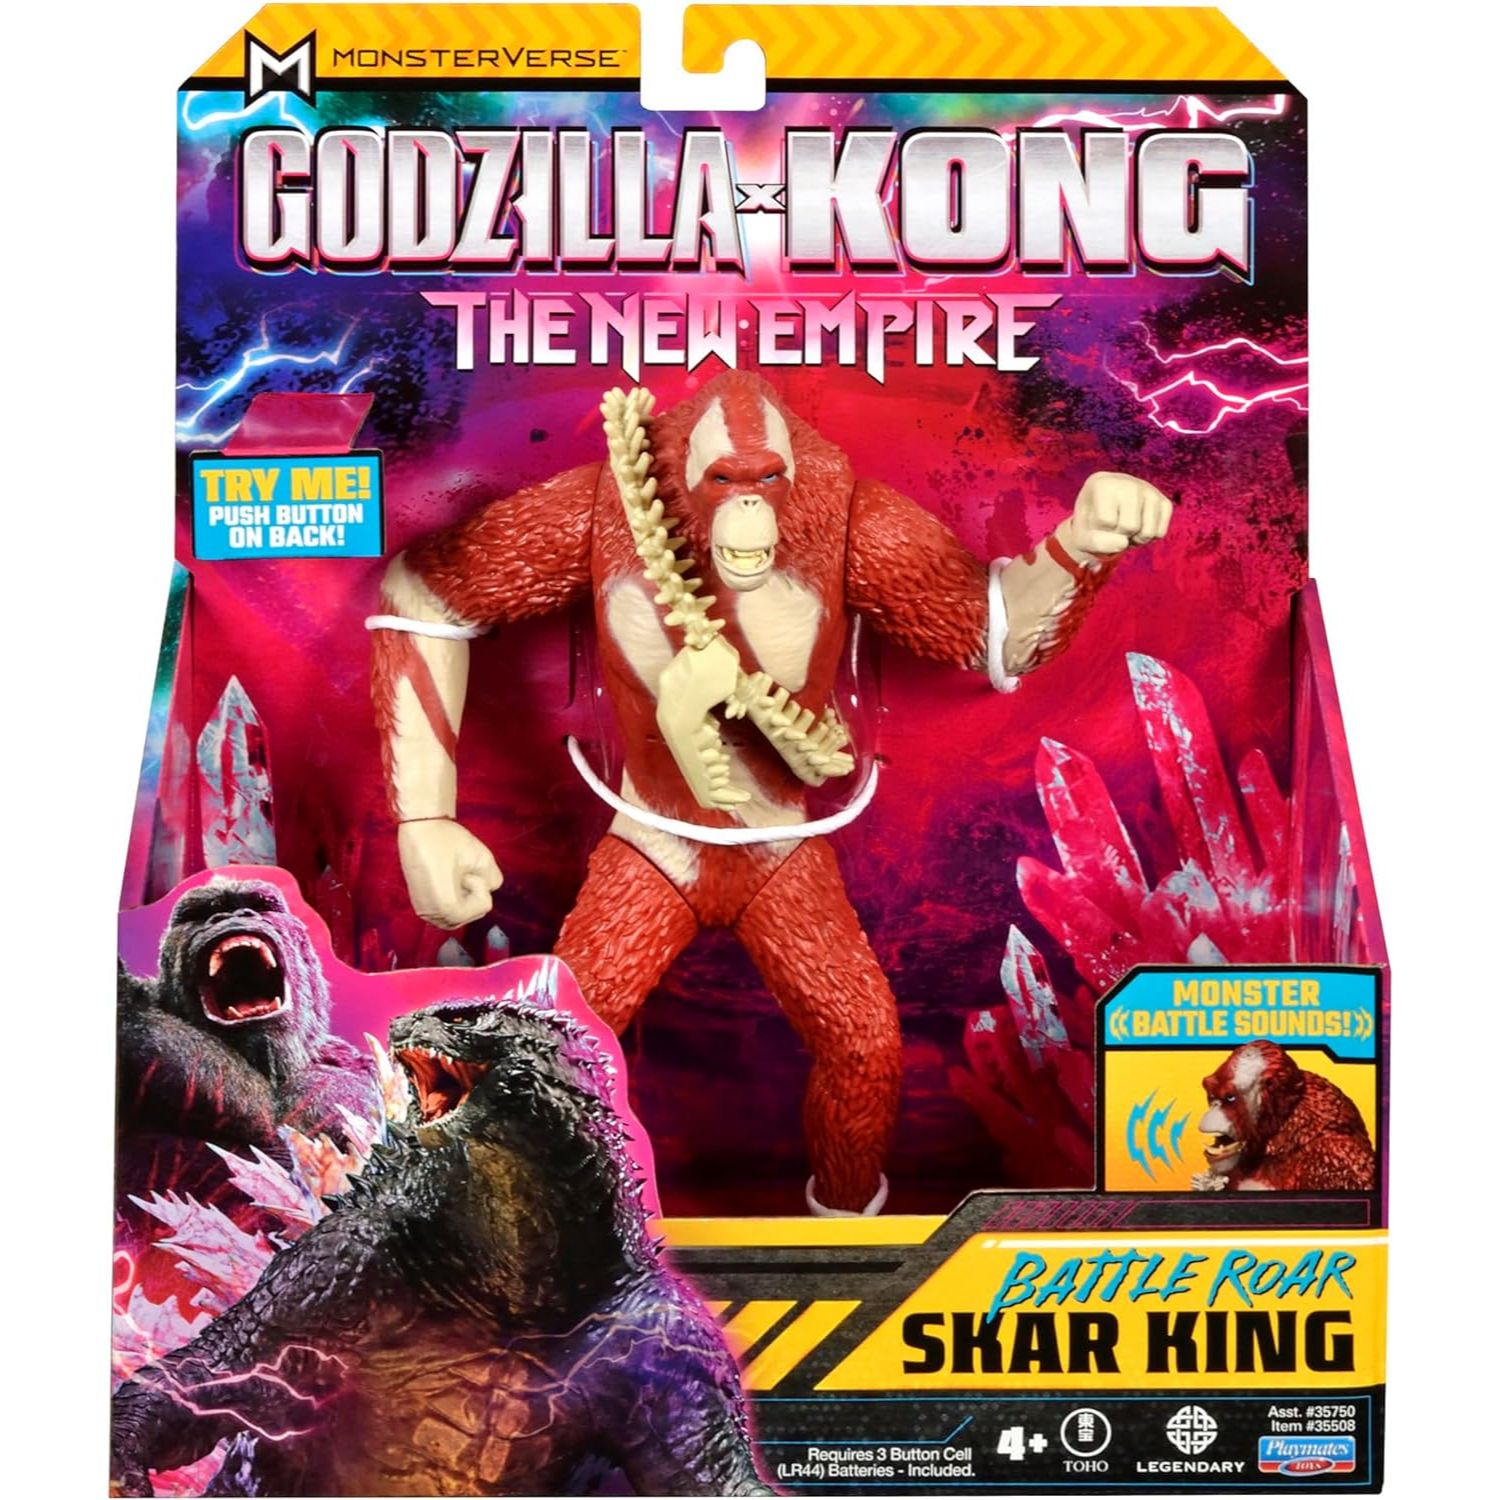 Godzilla x Kong The New Empire 7" Battle Roar Skar King Figure by Playmates Toys